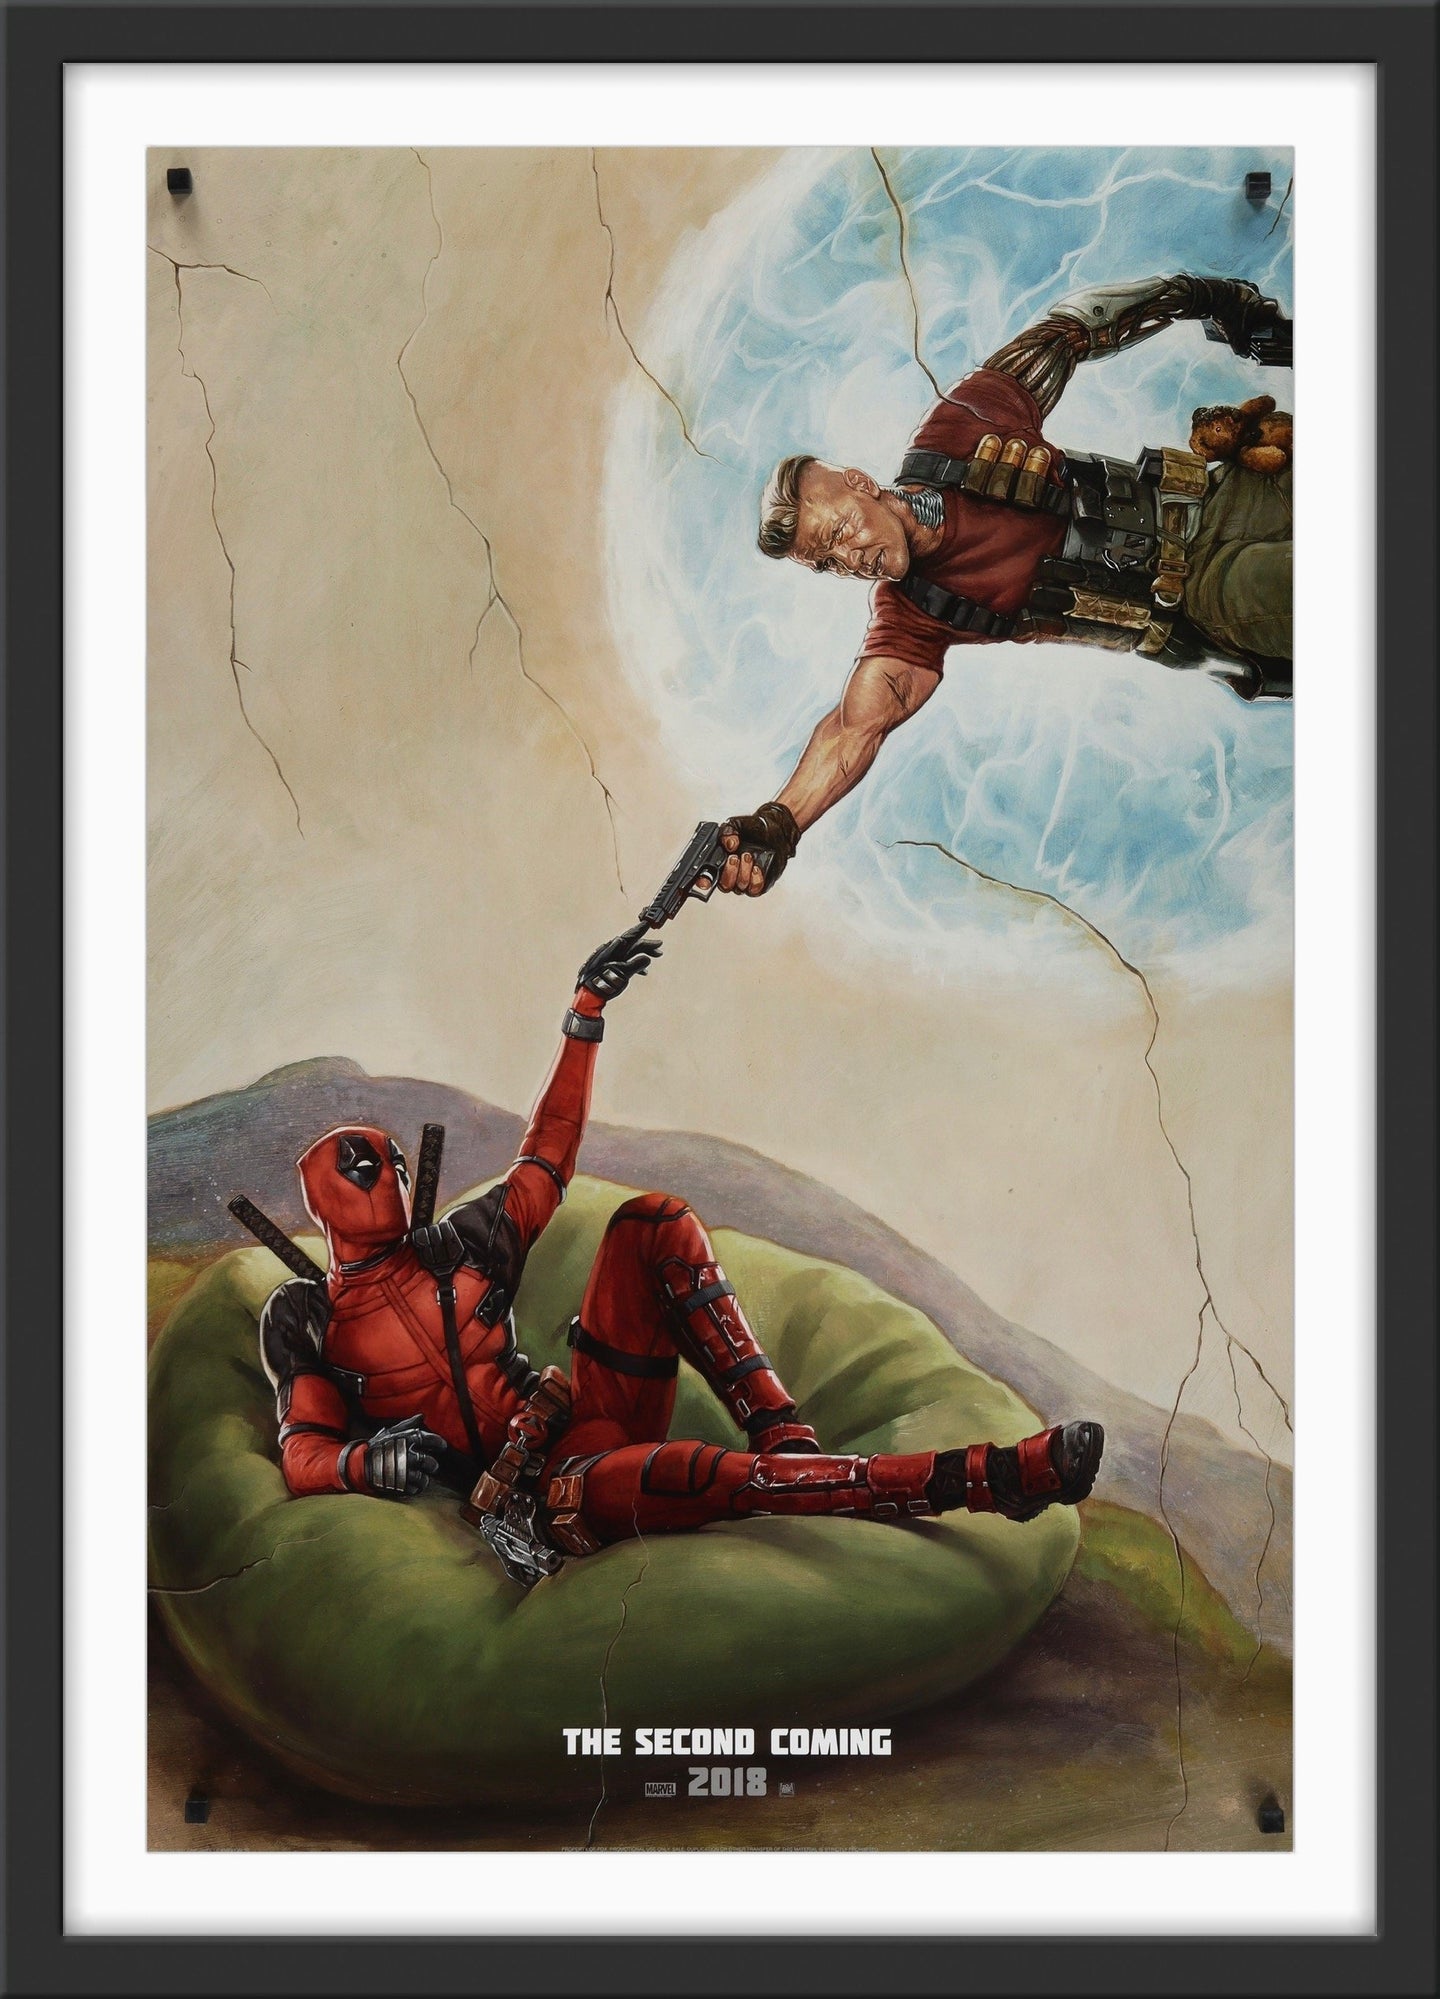 An original movie poster for the film Deadpool 2